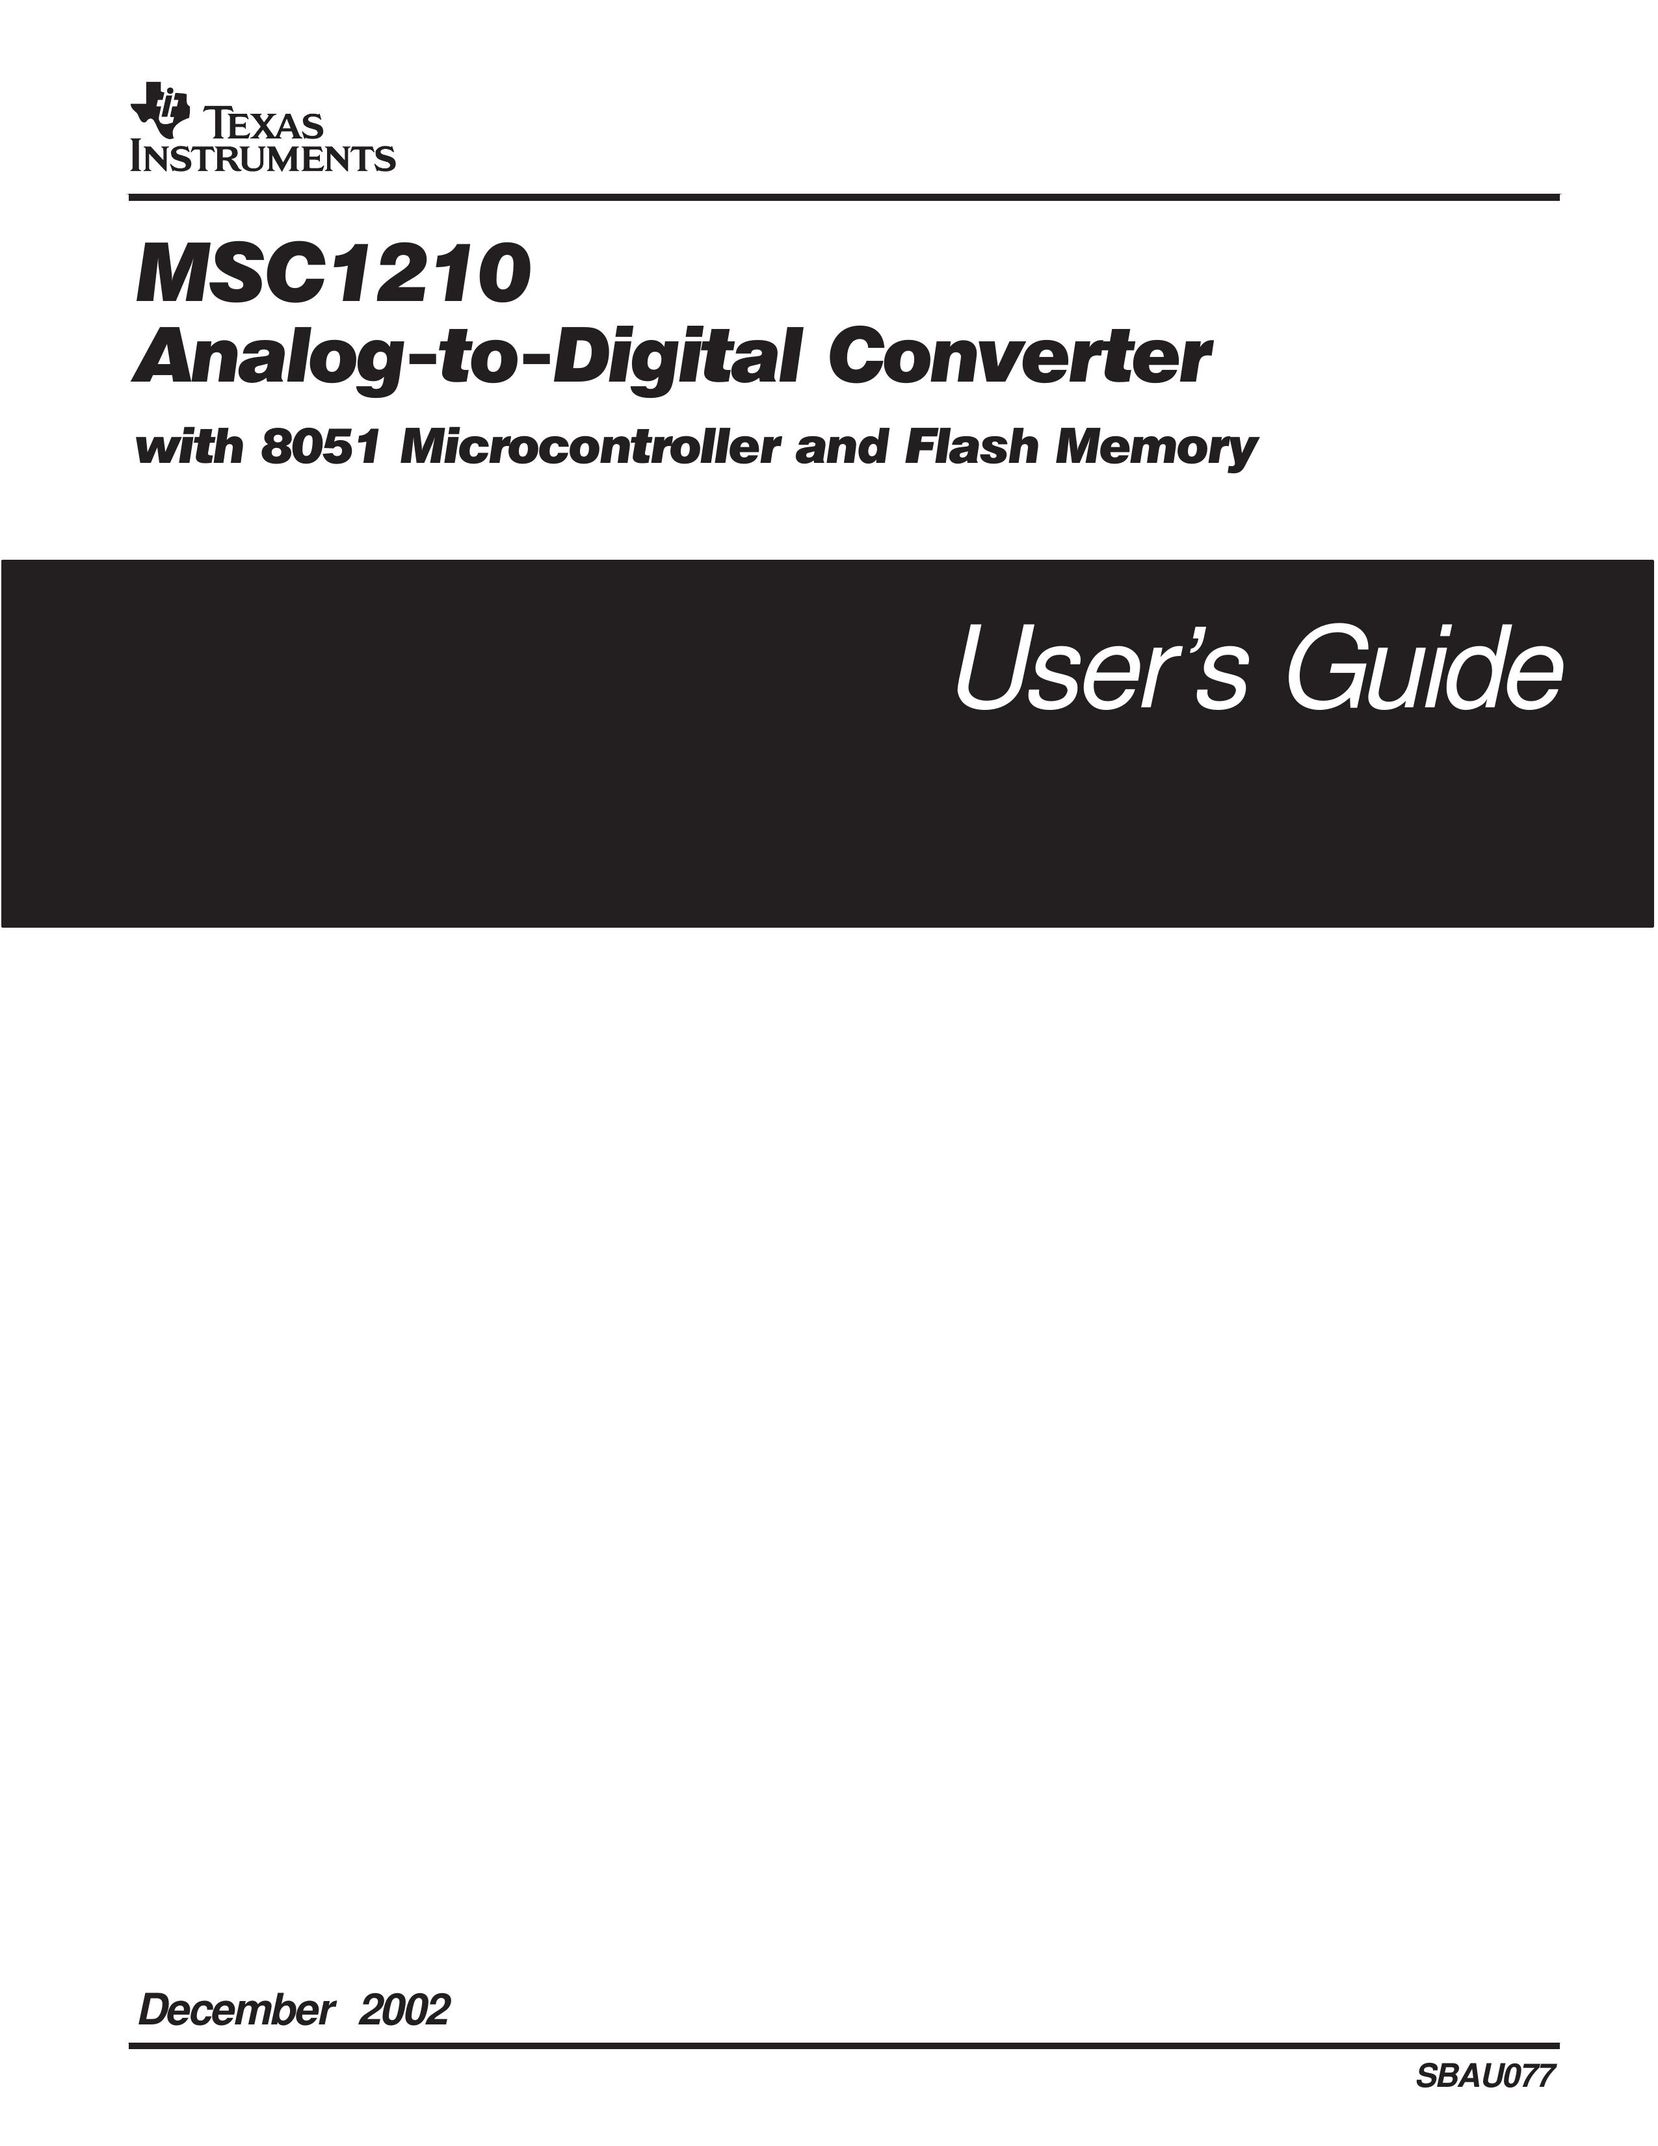 Texas Instruments MSC1210 Power Supply User Manual